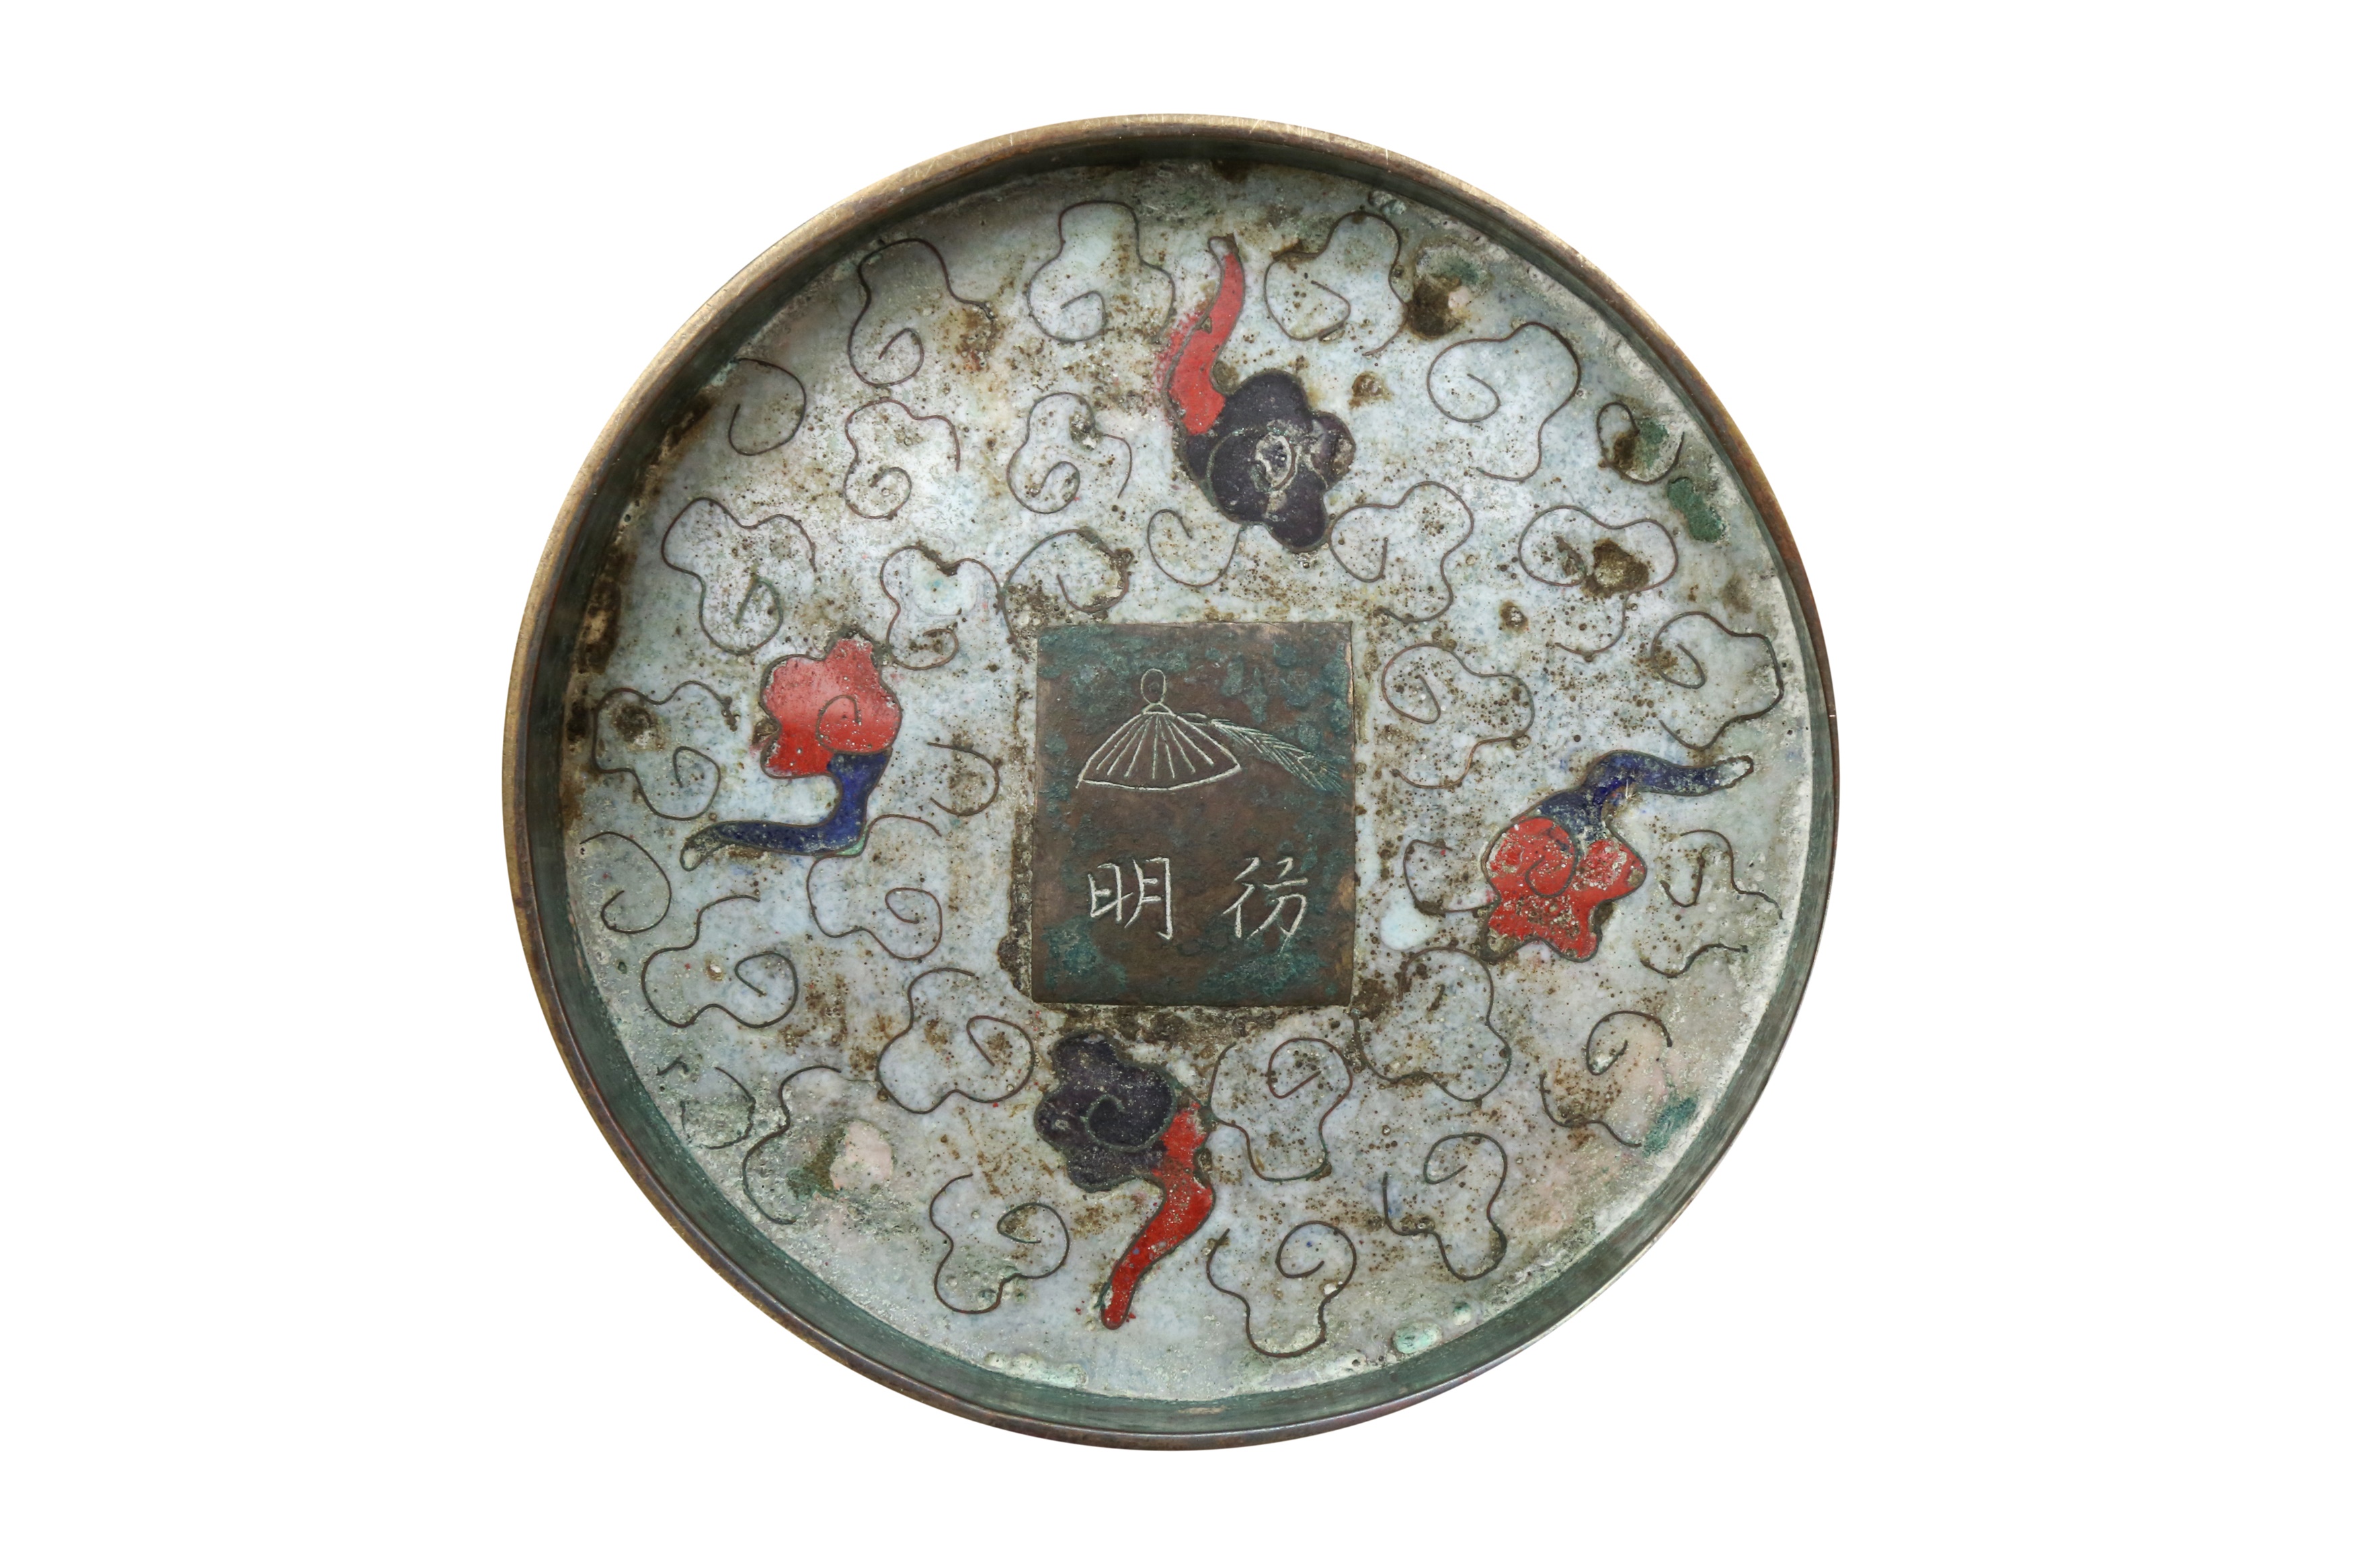 A PAIR OF CHINESE CLOISONNE ENAMEL BOWLS 清十九世紀 銅胎掐絲琺瑯盌一對 - Image 4 of 23